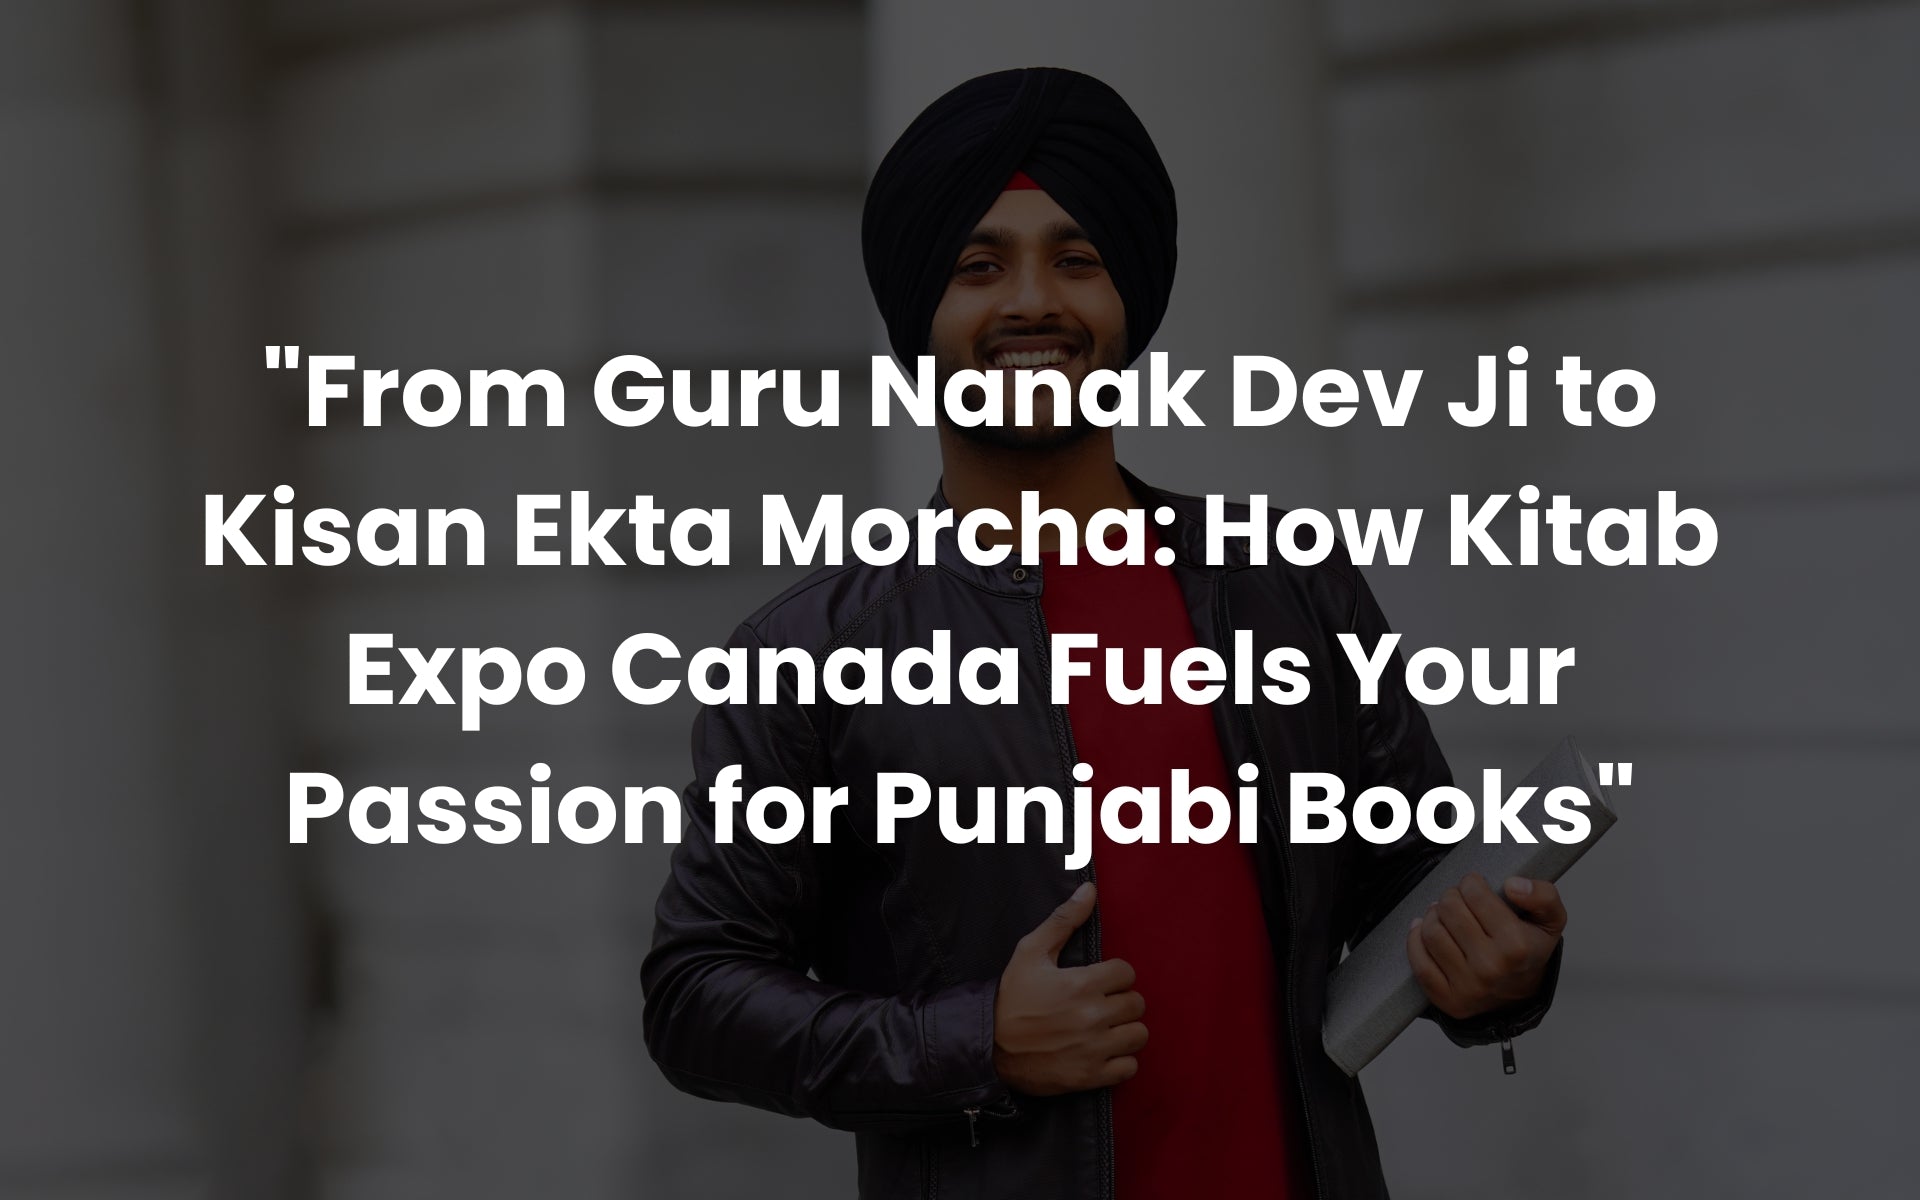 From Guru Nanak Dev Ji to Kisan Ekta Morcha: How Kitab Expo Canada Fuels Your Passion for Punjabi Books